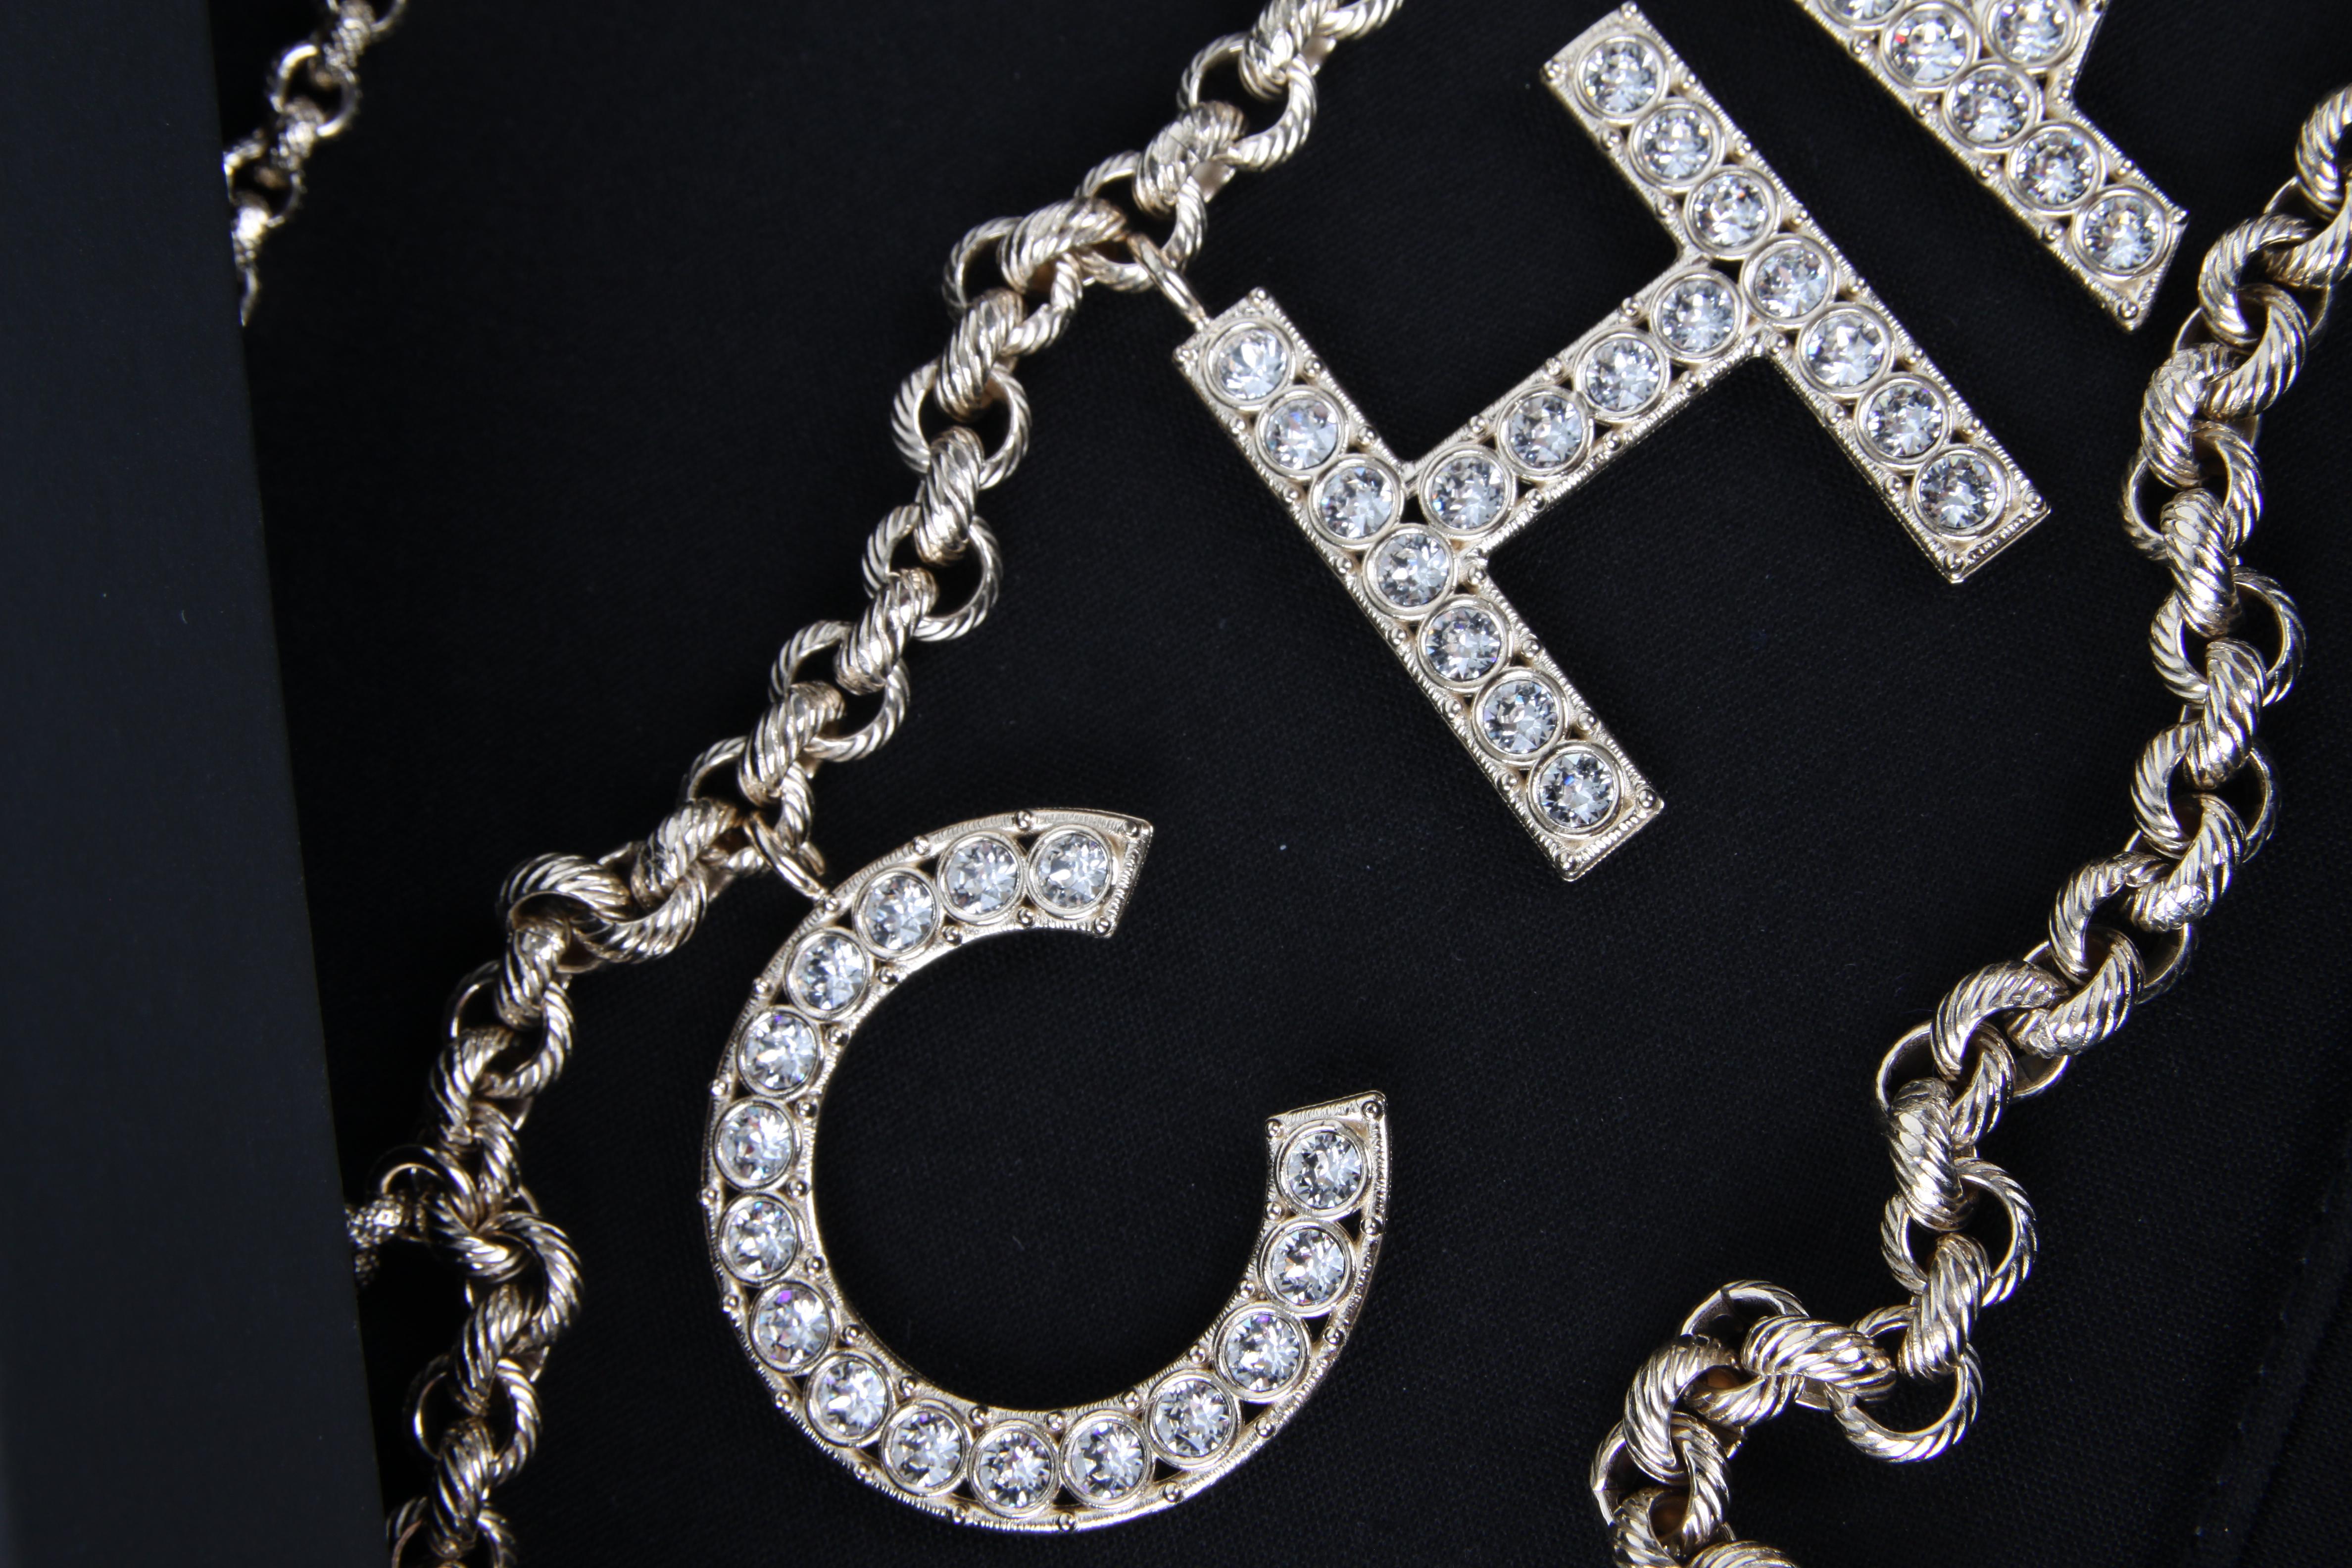 chanel belt chain